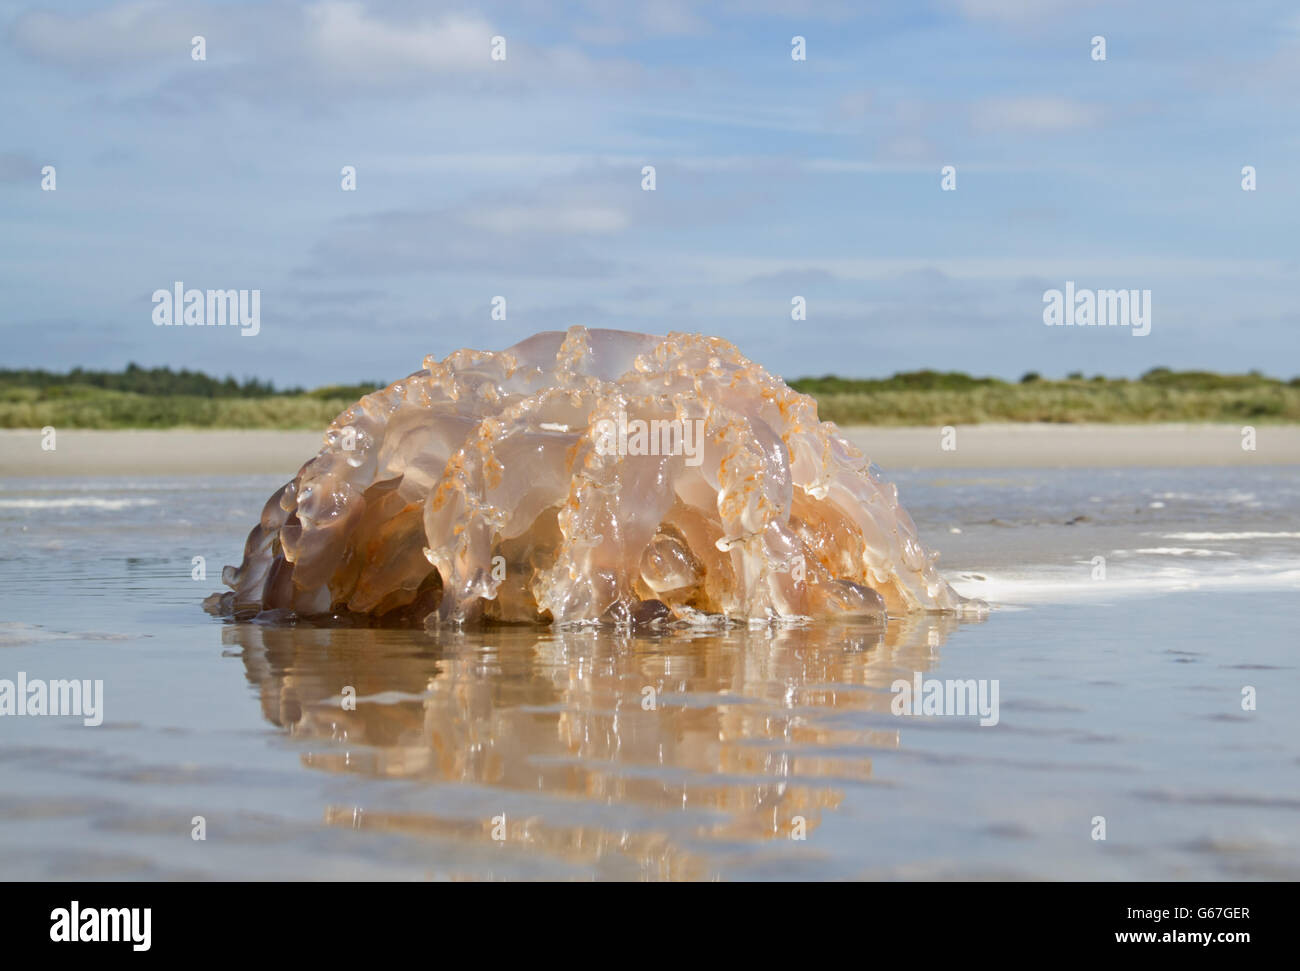 Barrel jellyfish upside down on the beach Stock Photo